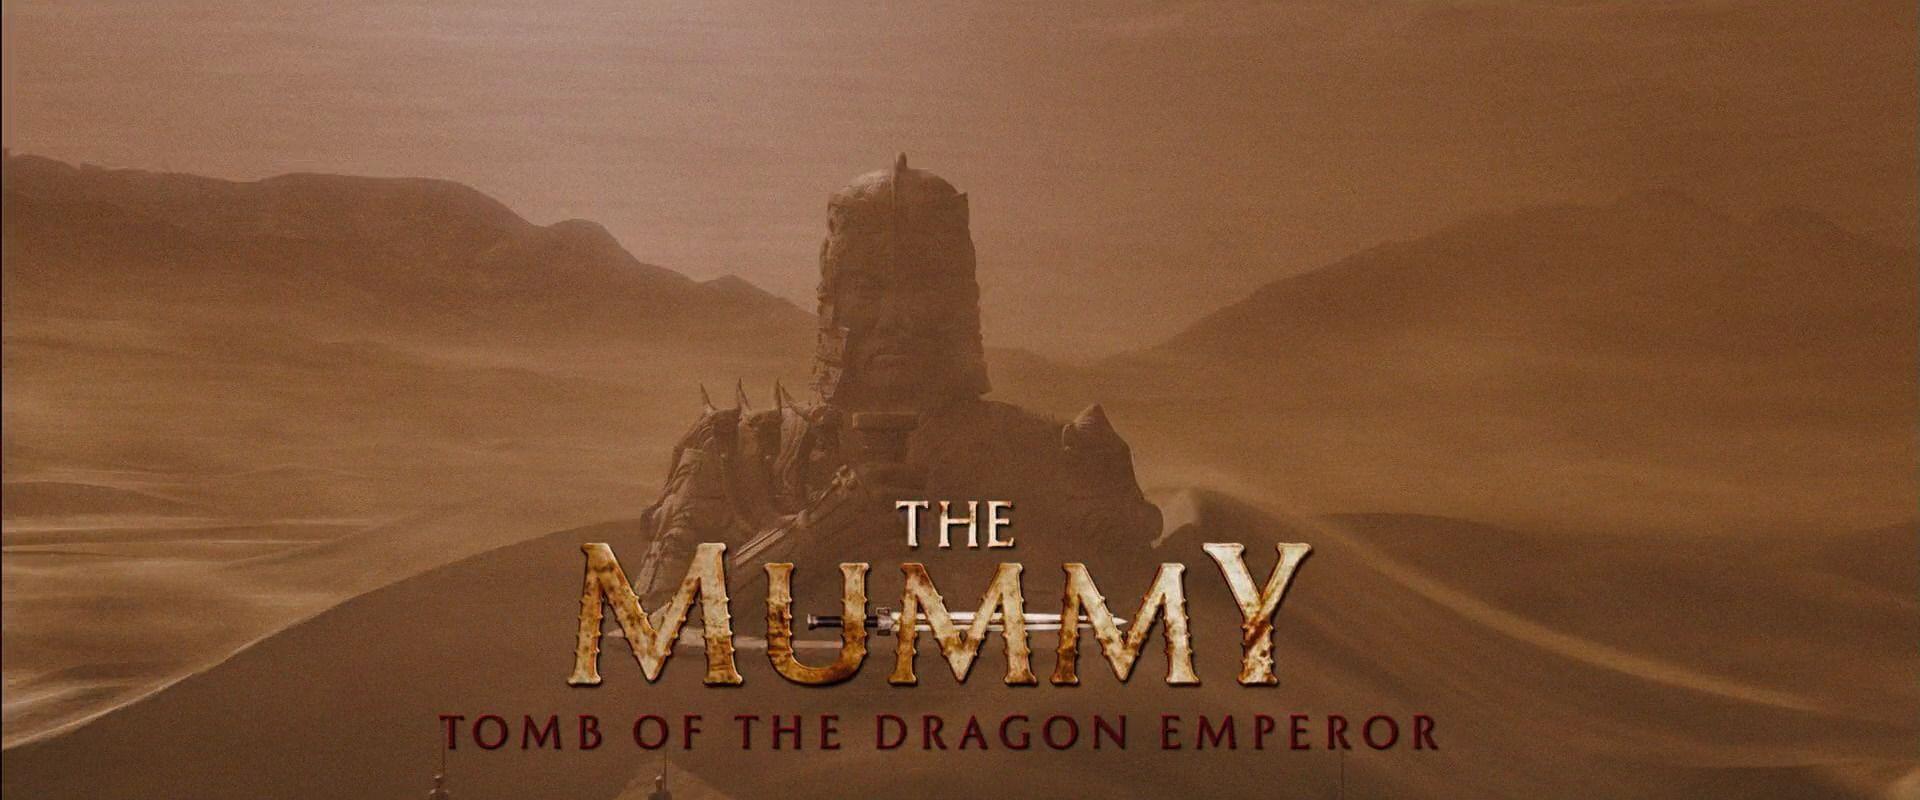 Mummy Movie Logo - The Mummy: Tomb of the Dragon Emperor (2008) - Movie Screencaps.com